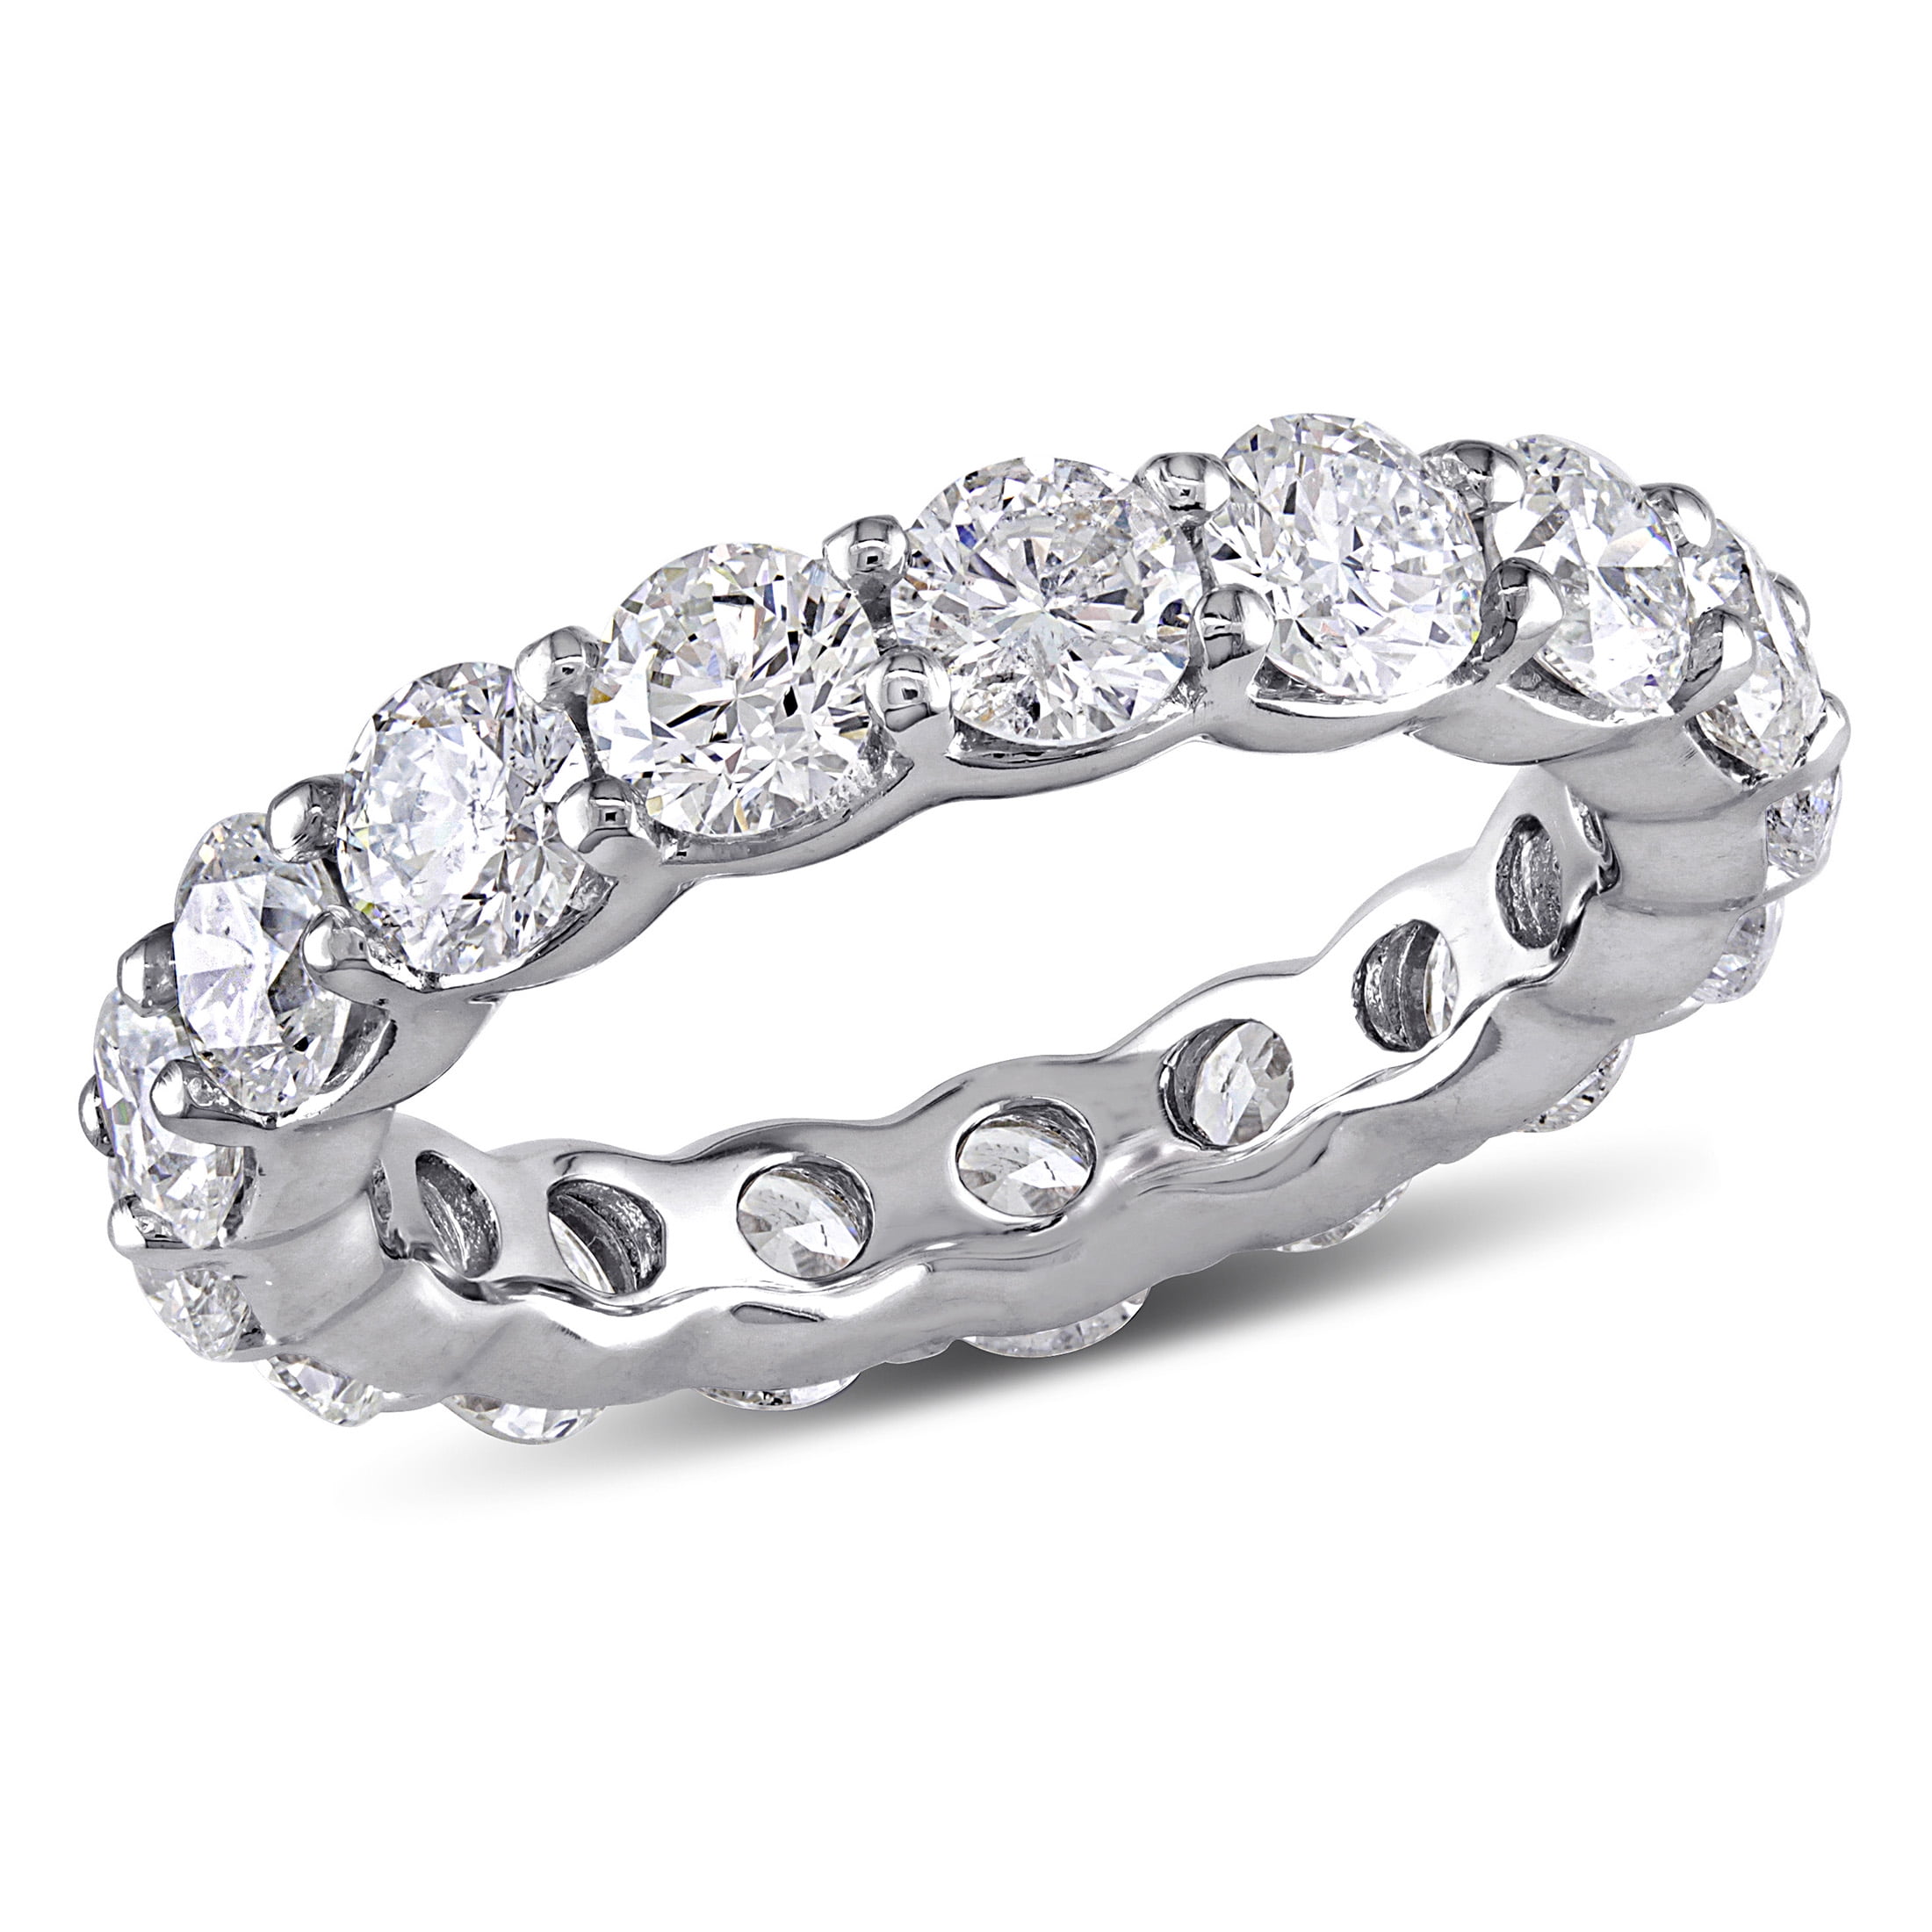 Women 18K White Gold Filled Lab Diamond 5.0 ct Promise Eternity Wedding Ring